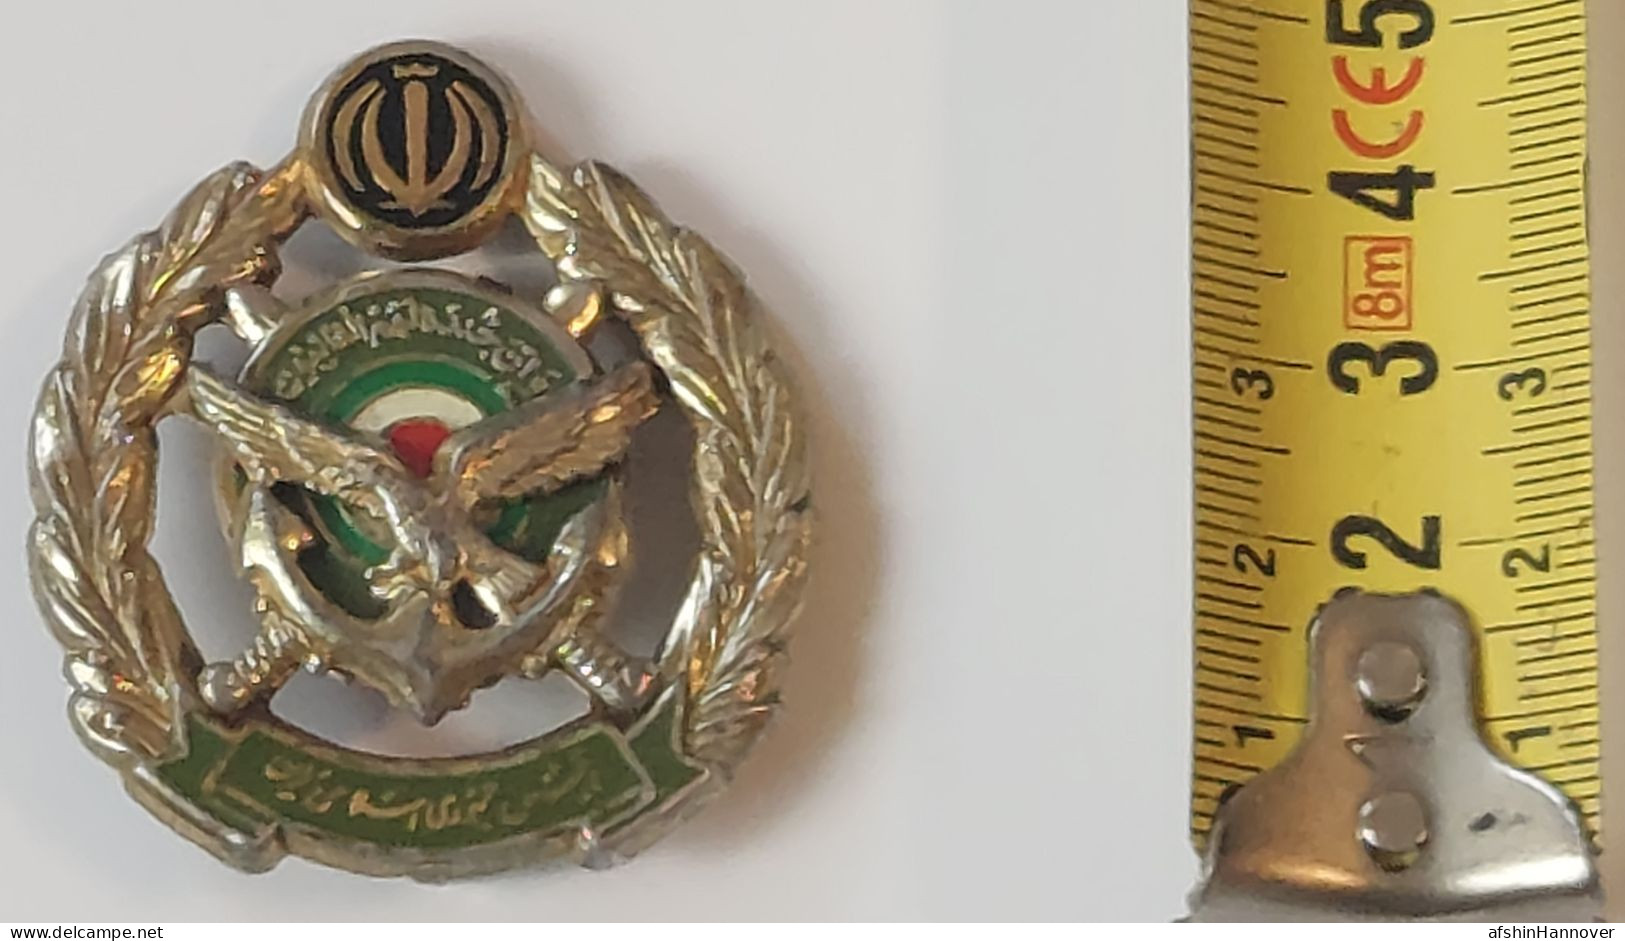 Persian, Iran , Iranian badge of the Iran Army  infantry force   نشان نیروی زمینی ارتش